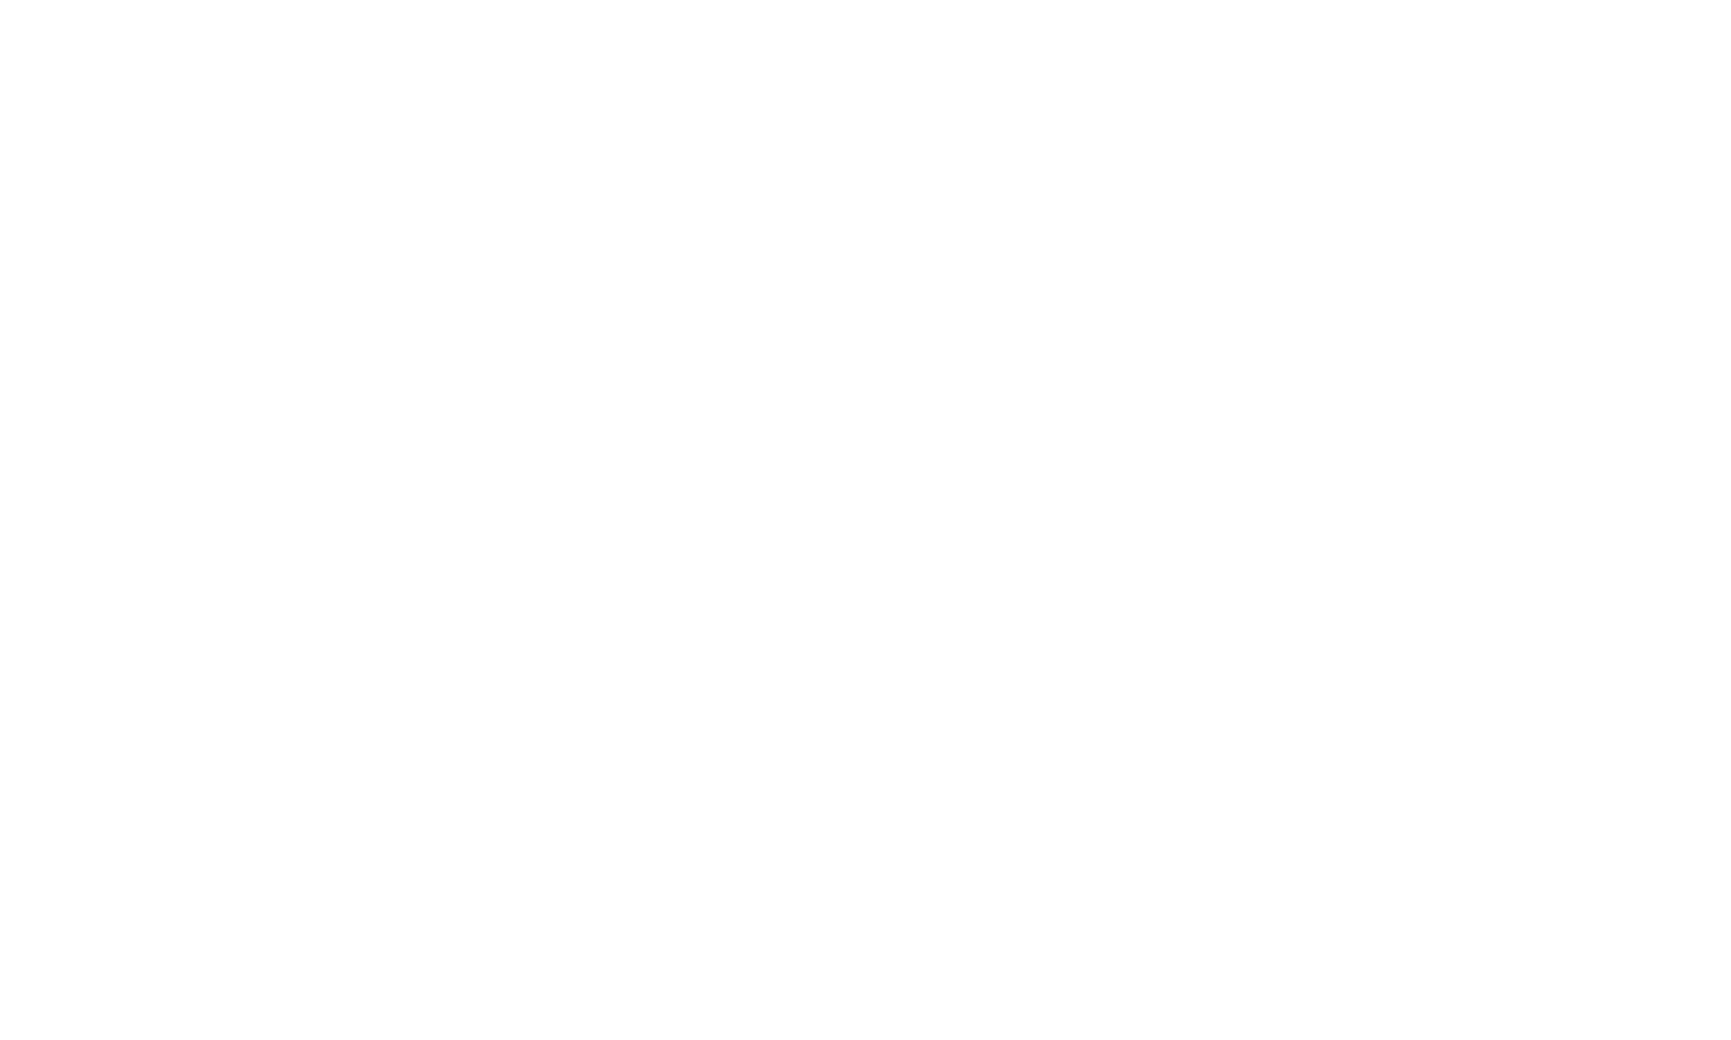 Leolux logos 0002 wit